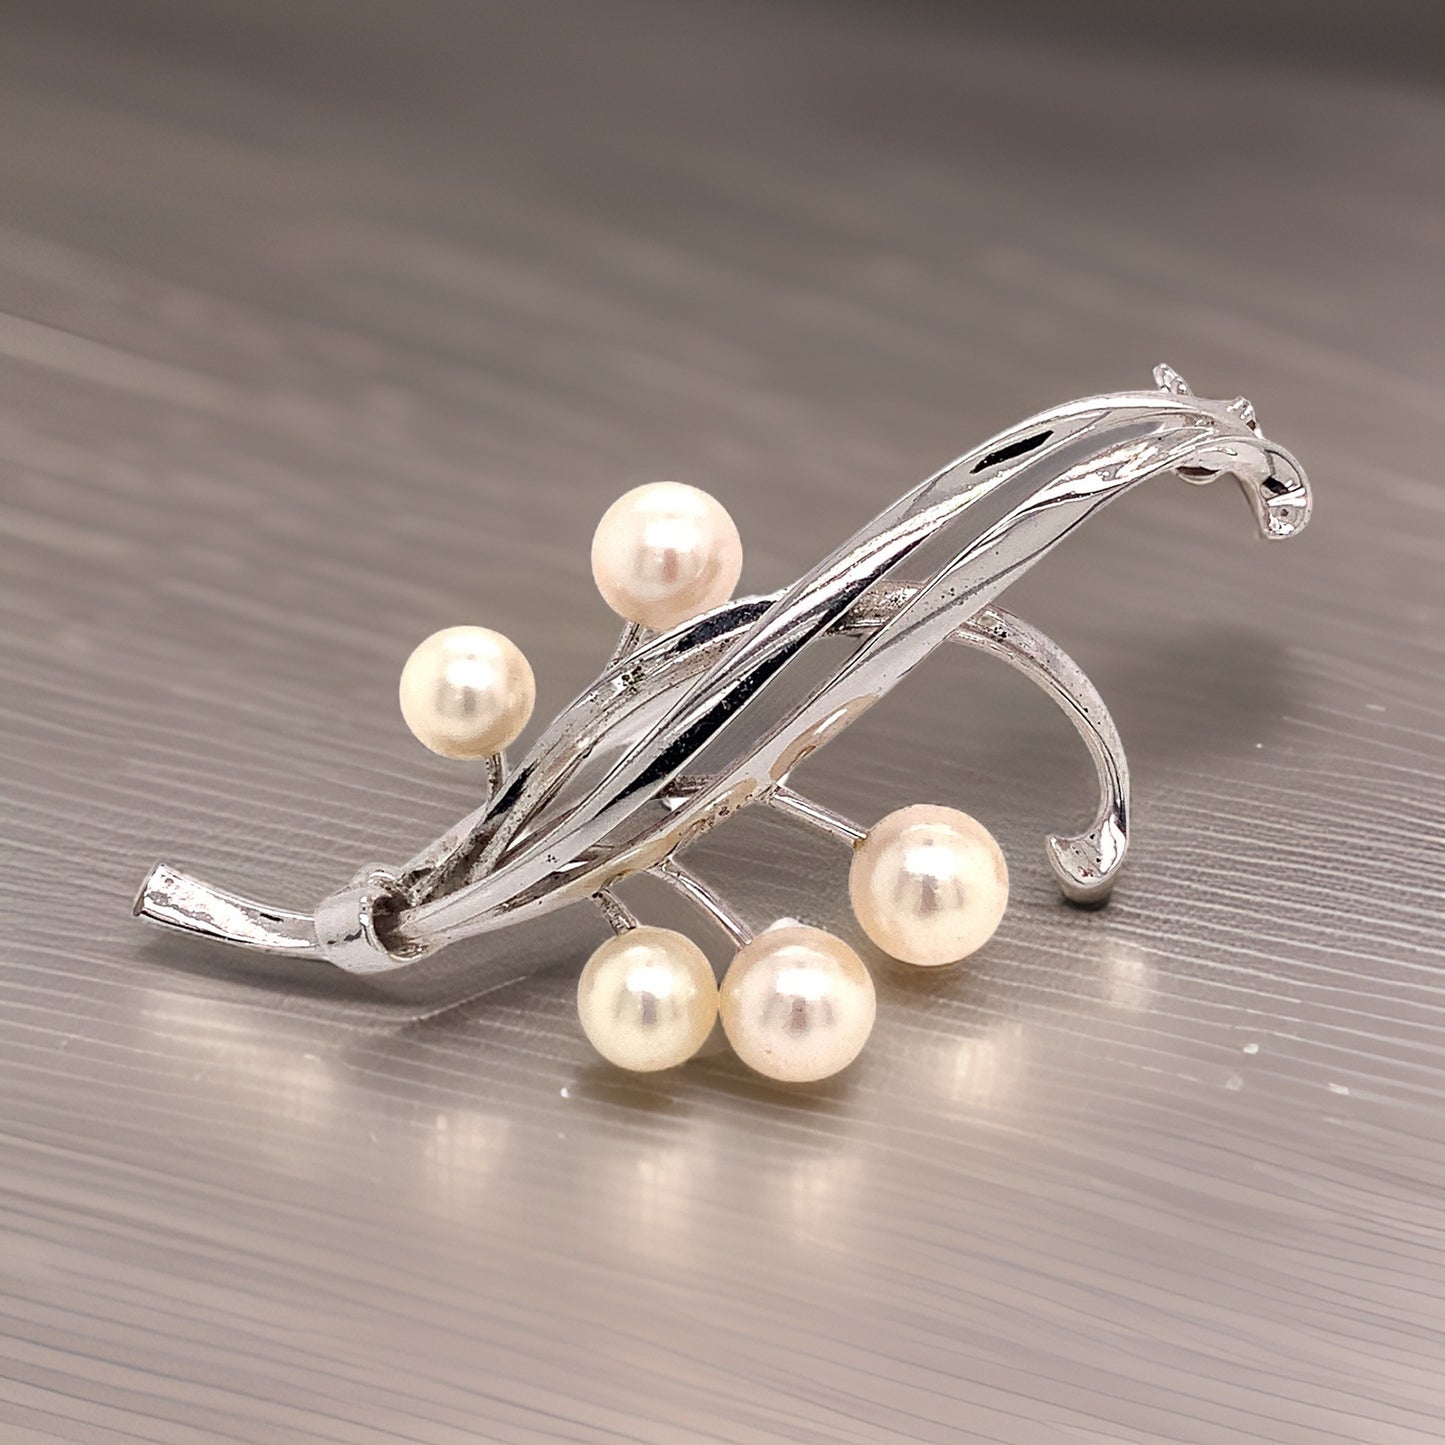 Mikimoto Estate Akoya Pearl Brooch Pin Sterling Silver 6.6mm 5.43 gr M185 - Certified Fine Jewelry